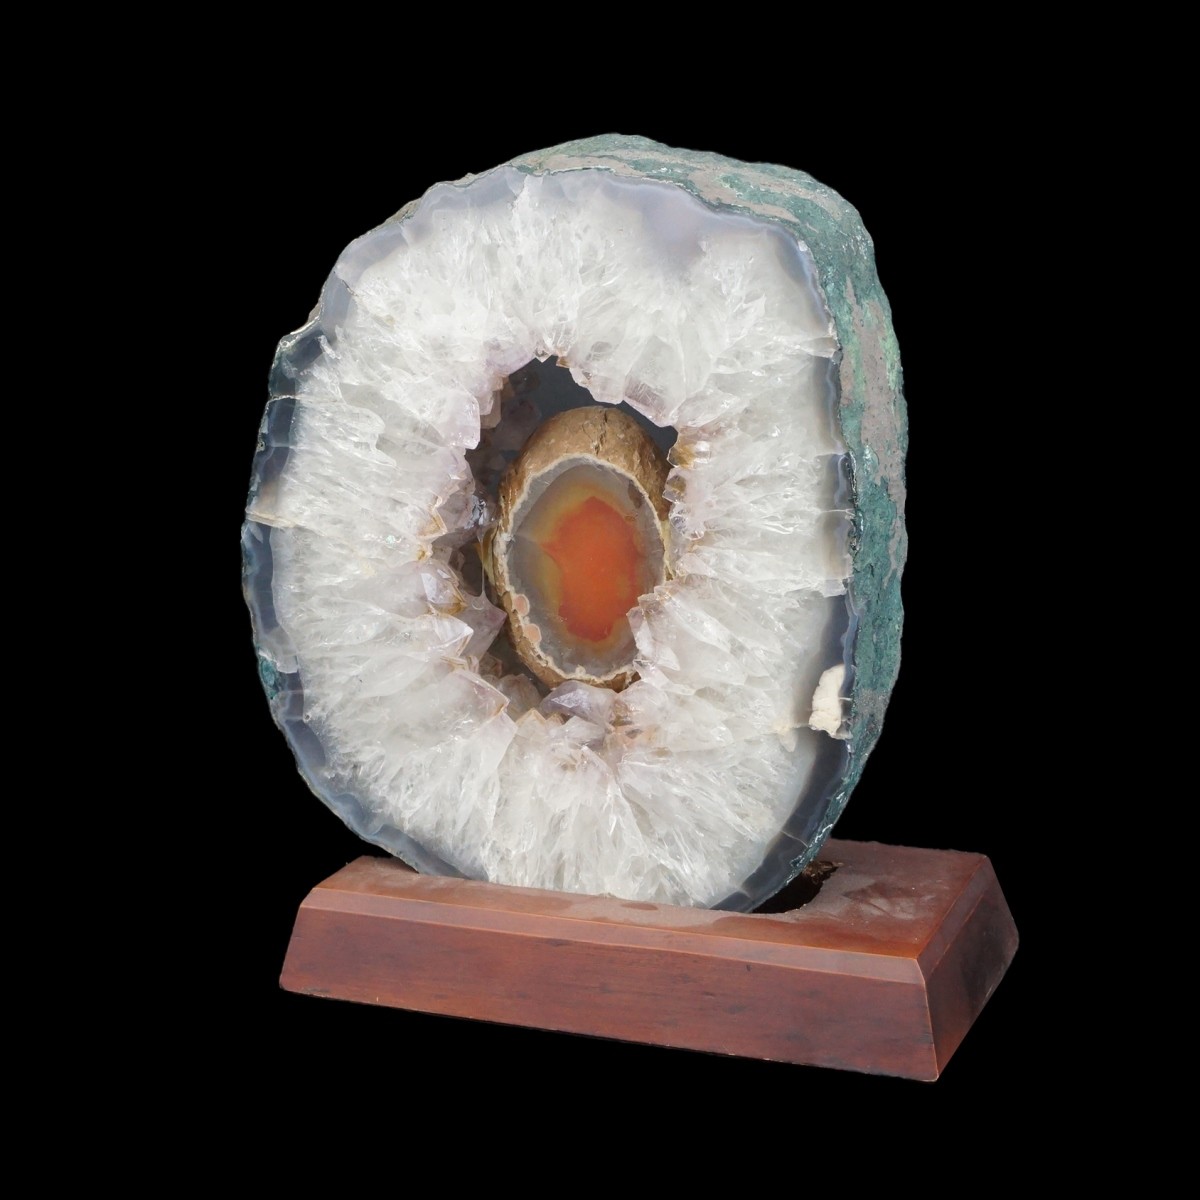 Natural Amethyst Crystal Geode